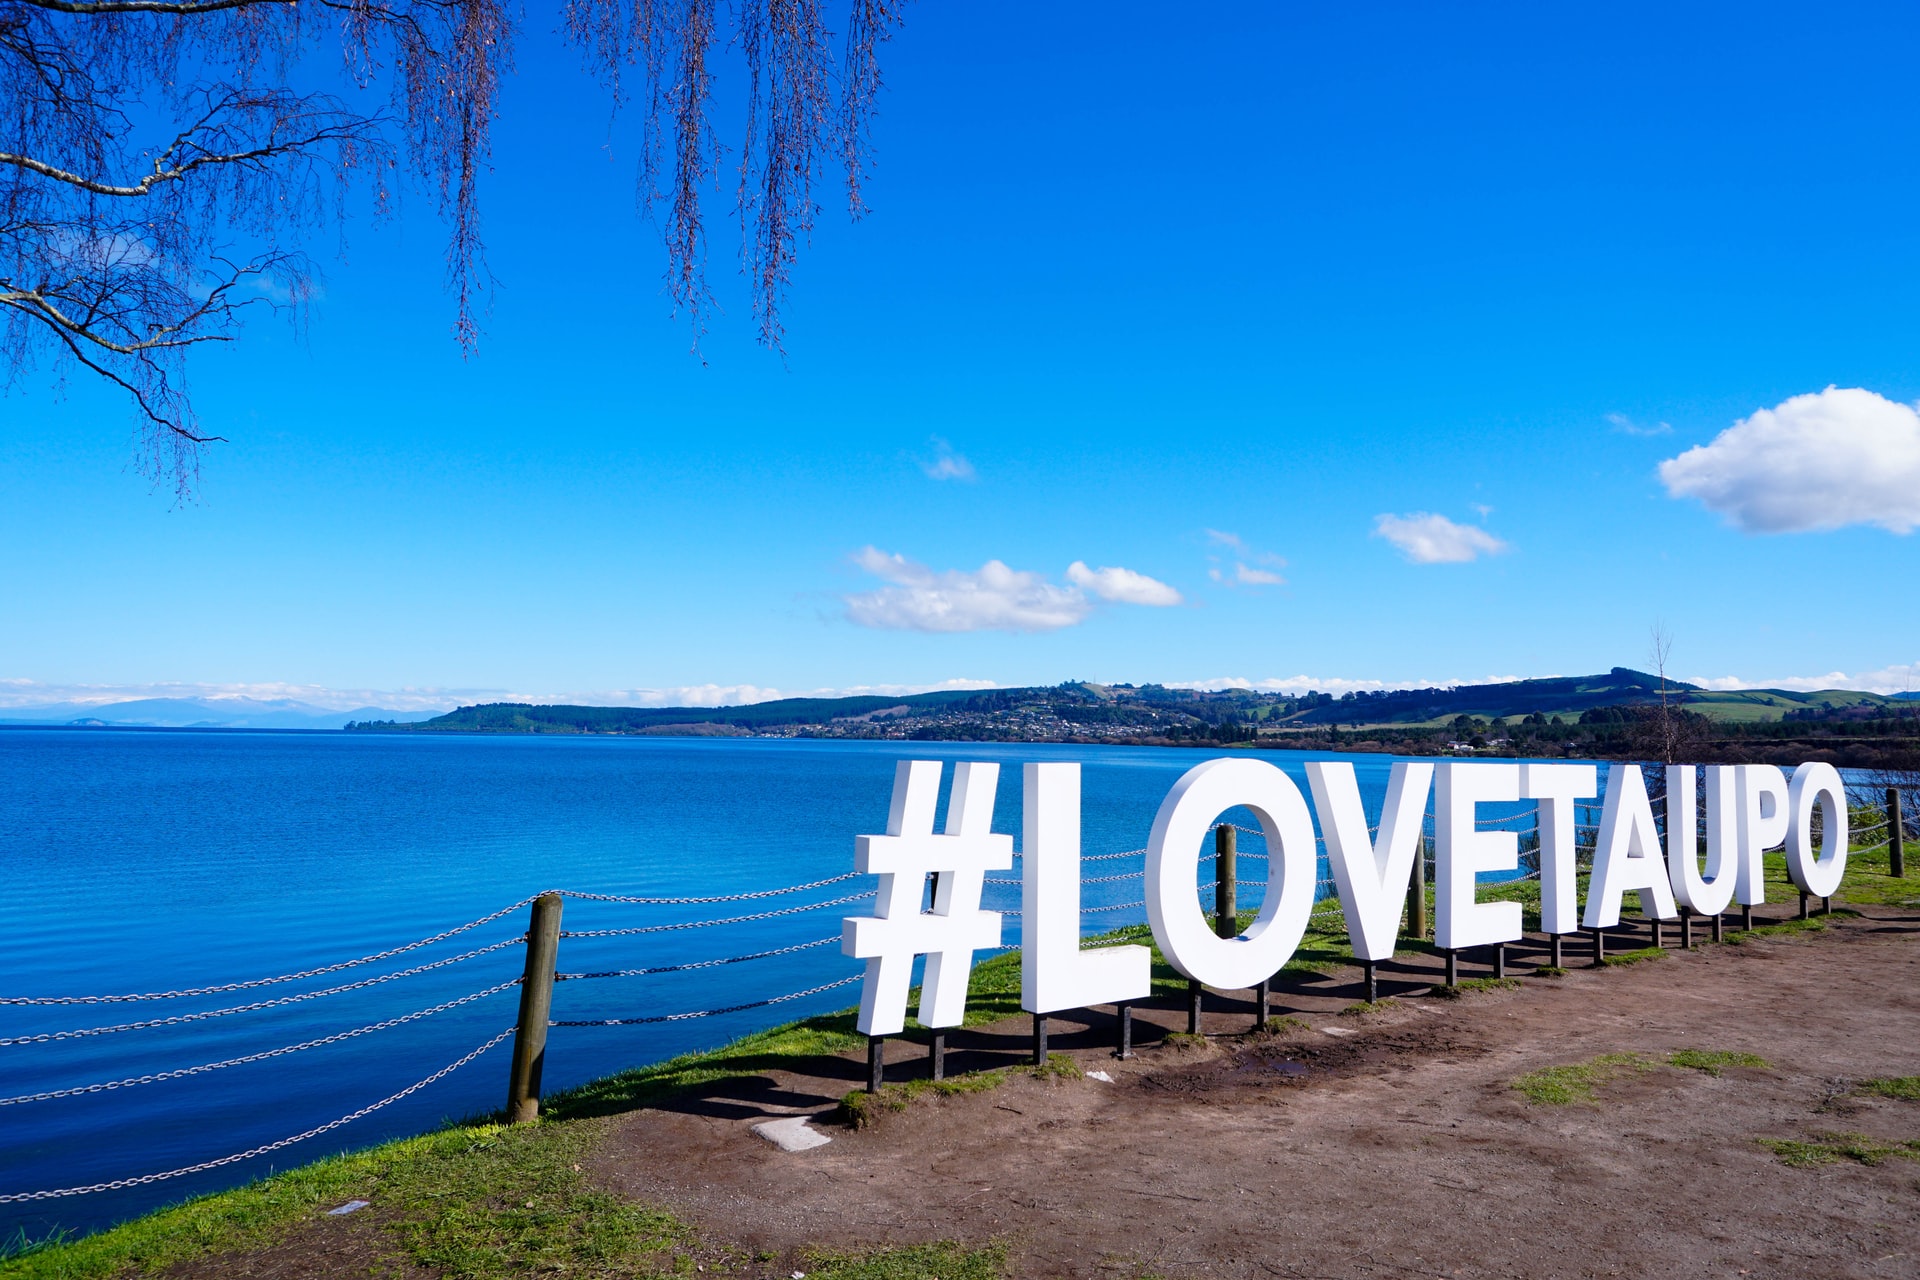 Love Taupo sign next to Lake Taupo